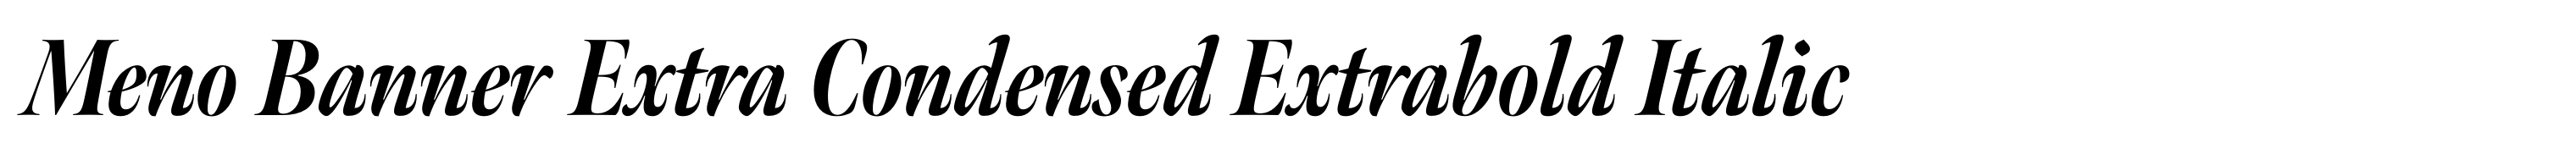 Meno Banner Extra Condensed Extrabold Italic